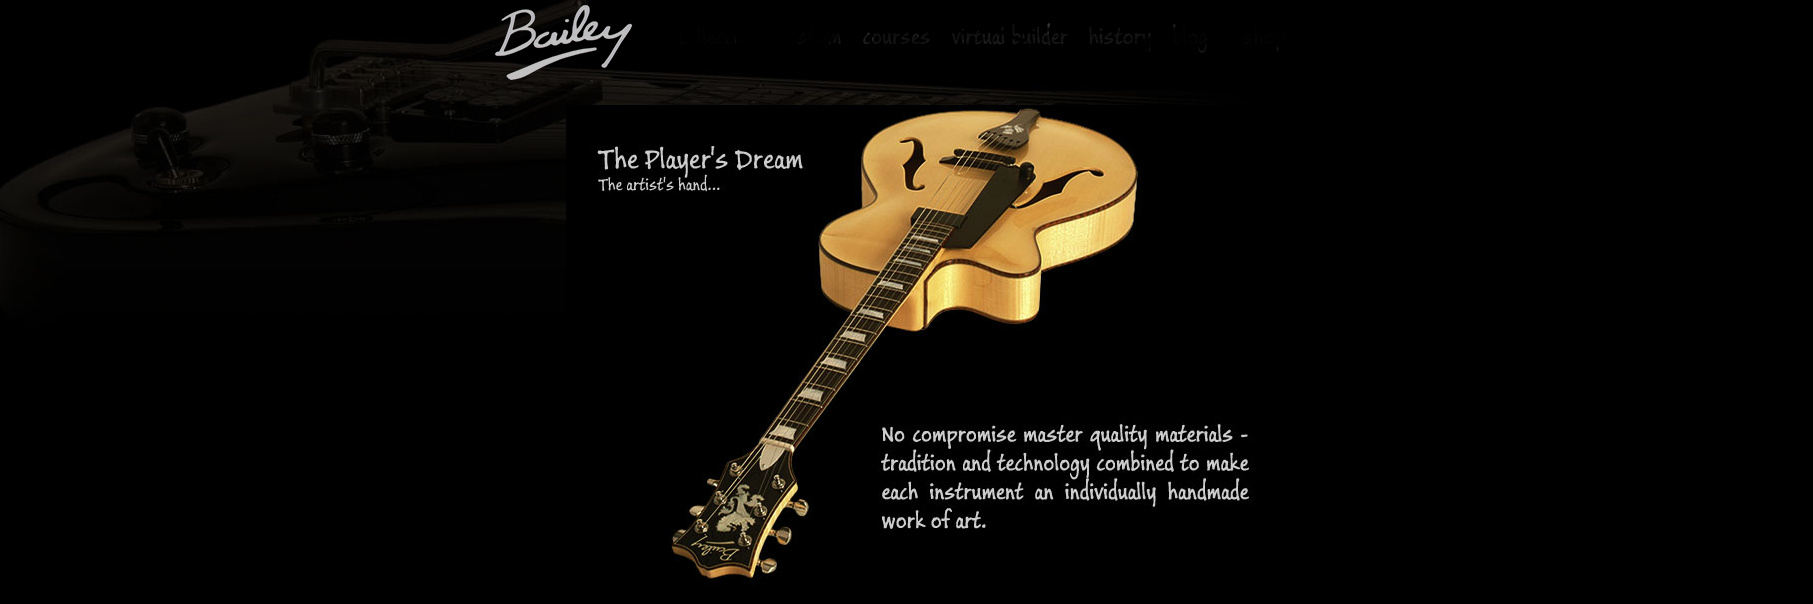 Bailey Guitars   Maker of the finest handmade guitars.png.jpg